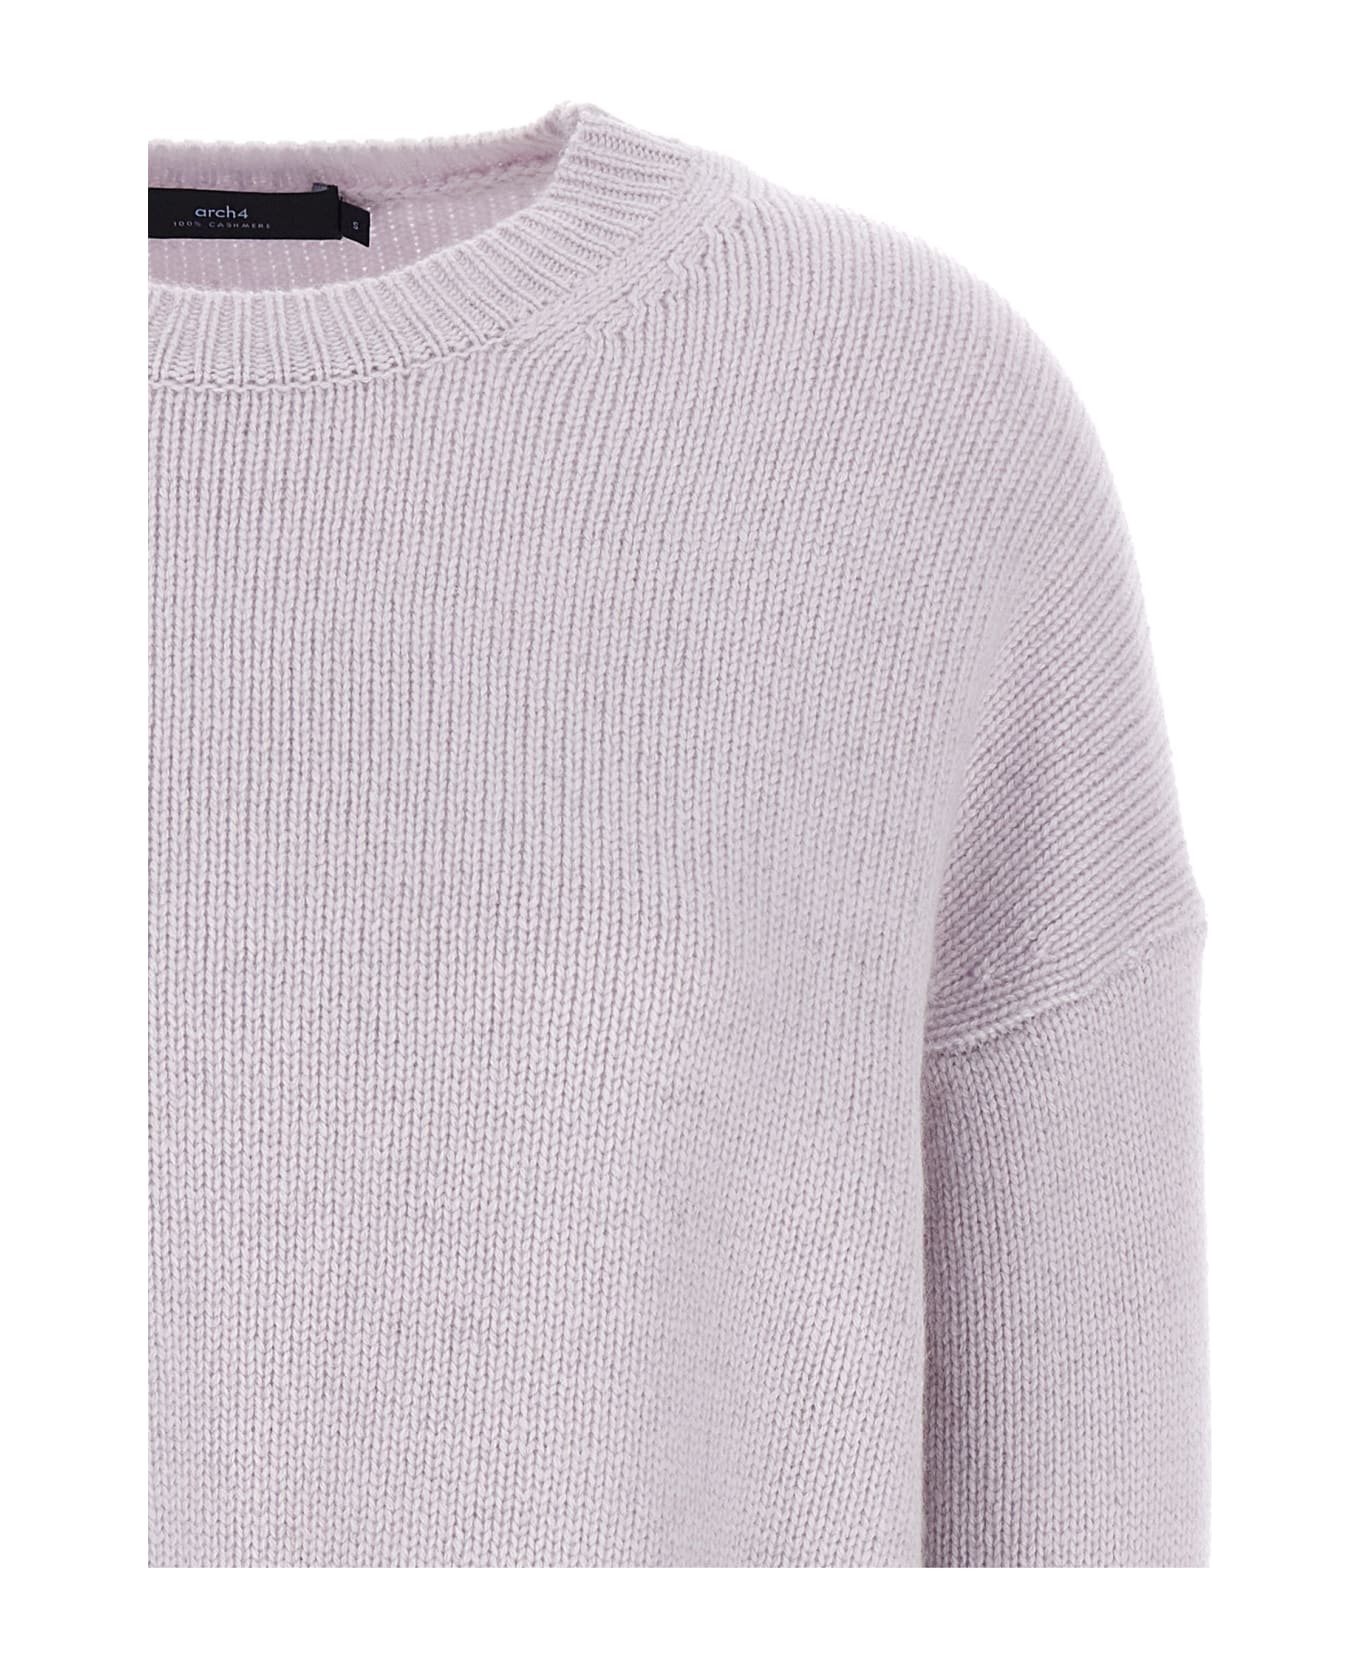 arch4 'the Ivy' Sweater - Purple ニットウェア